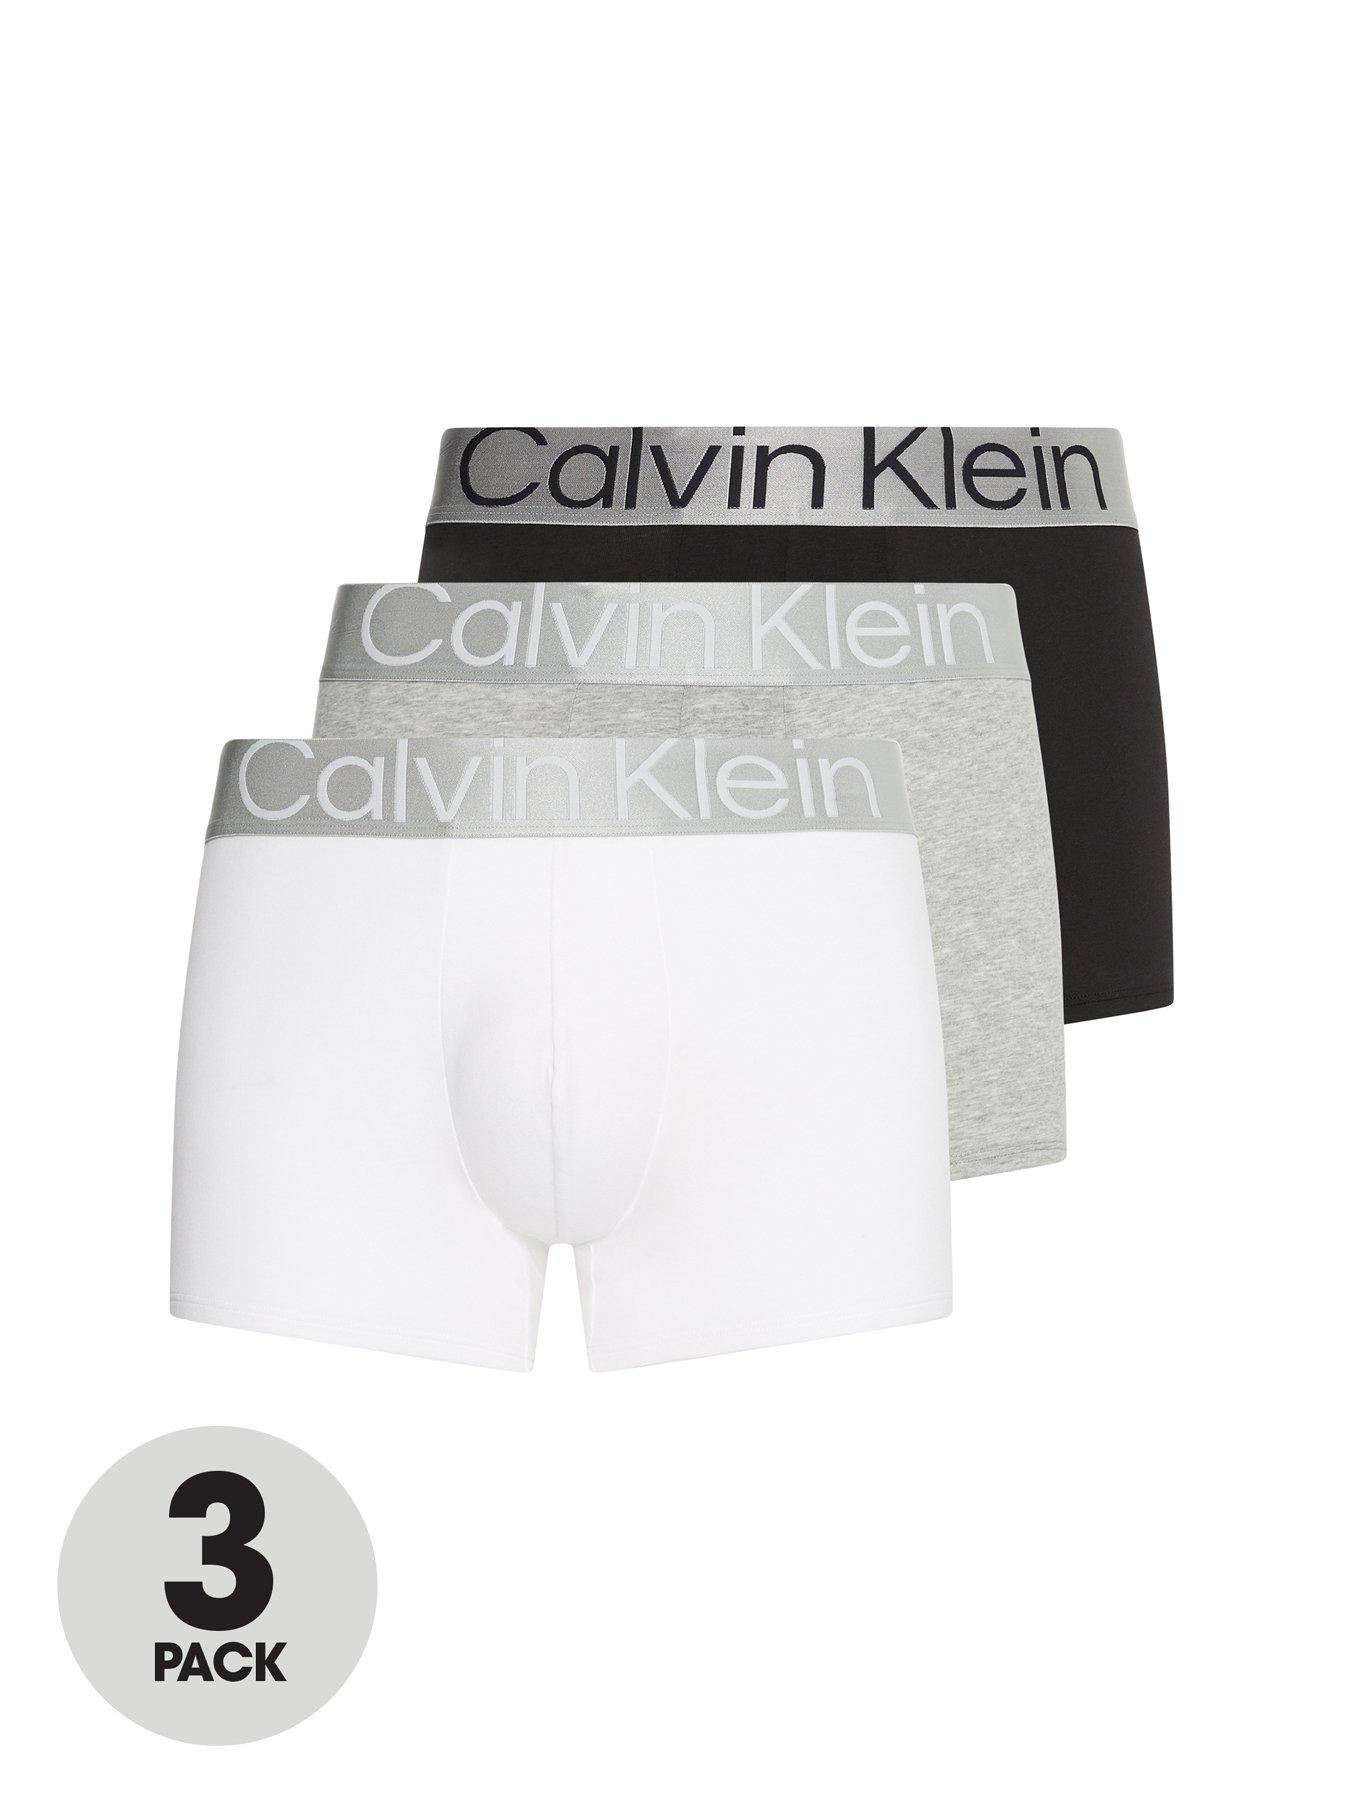 Calvin Klein Calvin Klein 3 Pack Low Rise Trunks - White